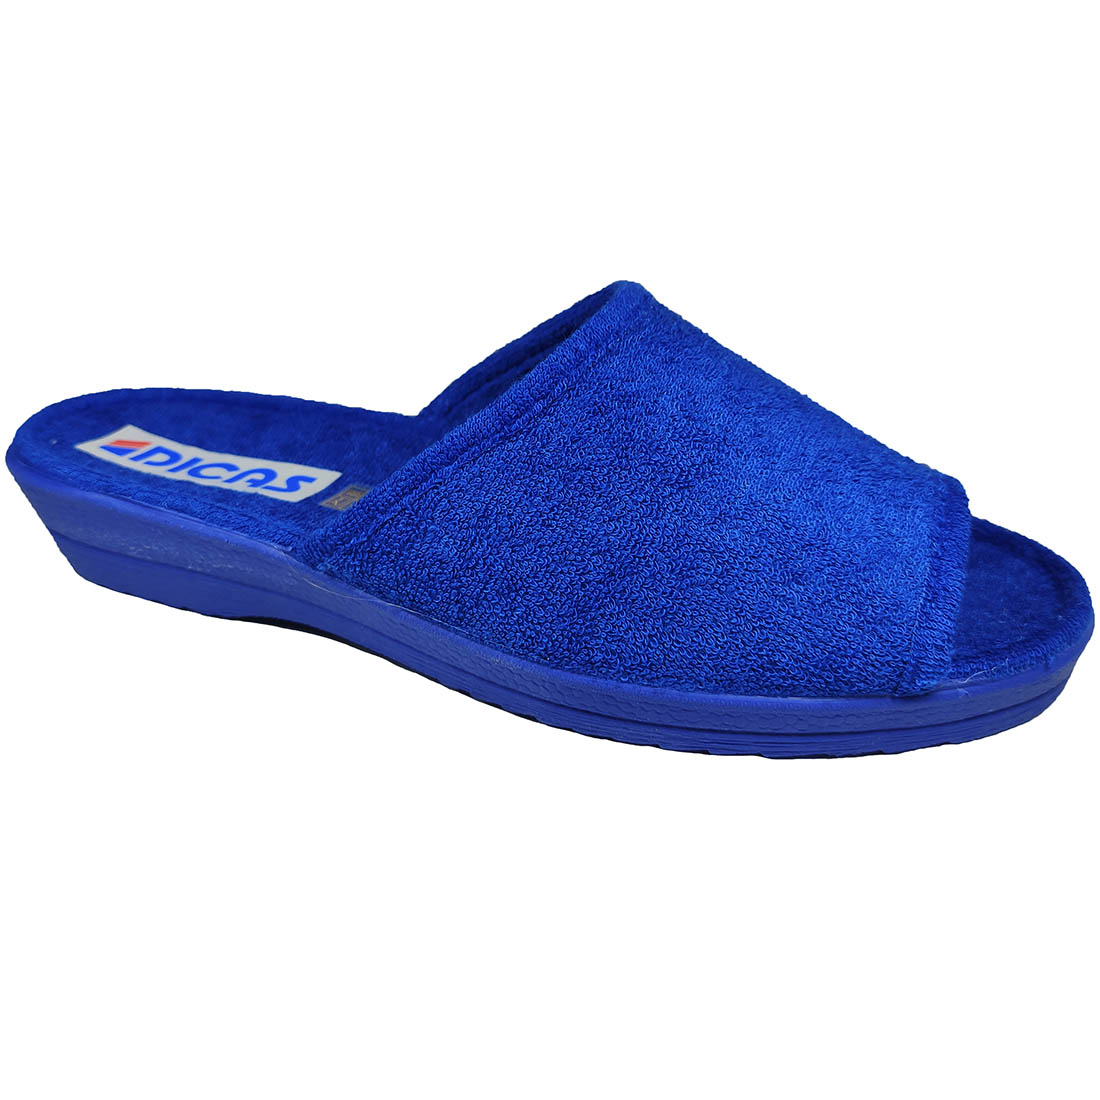 Womens Towel Slippers Dicas 444 Light blue